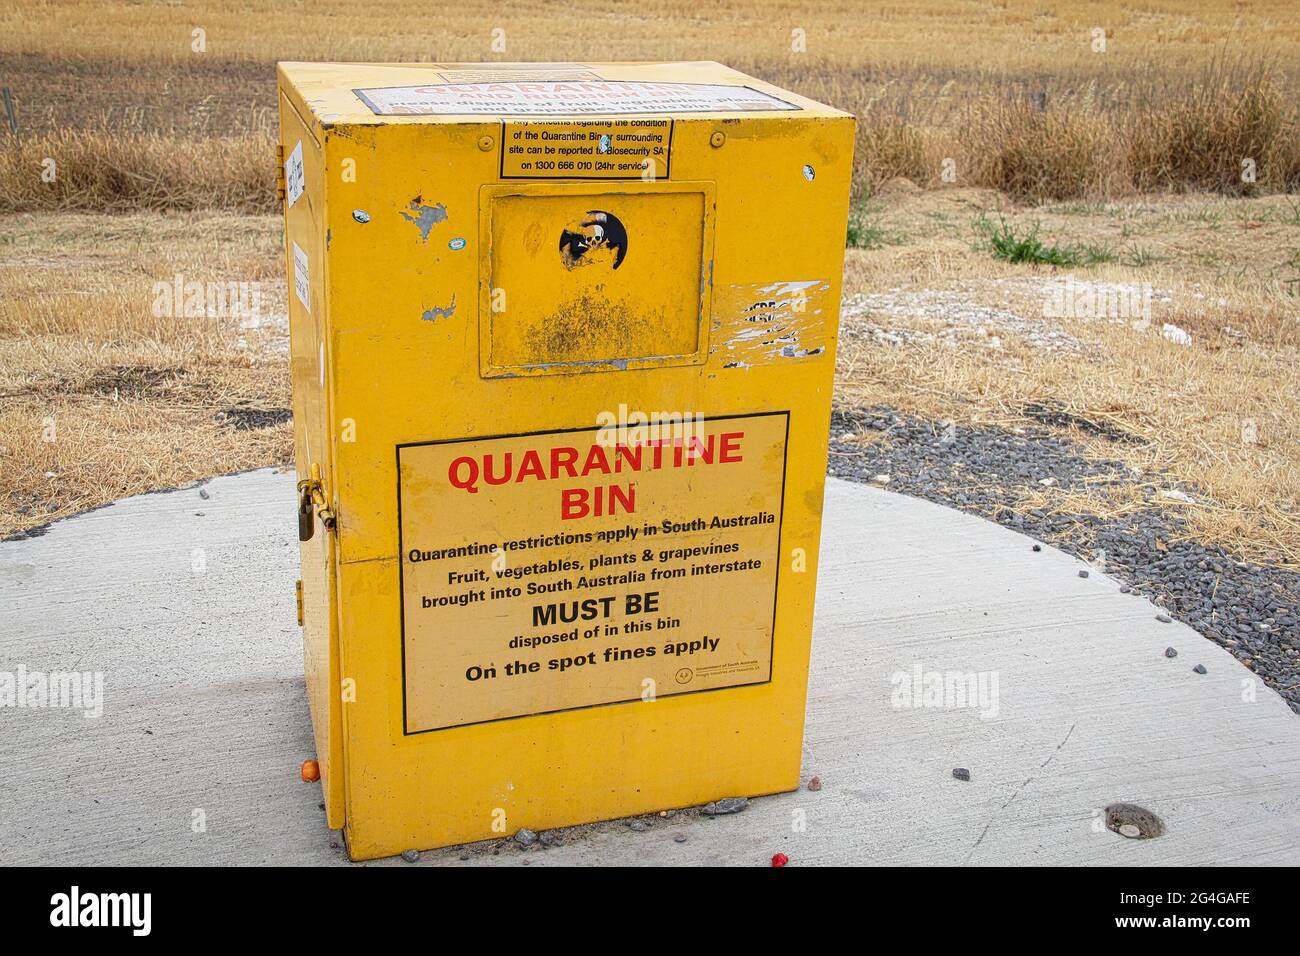 Australian PIRSA interstate biosecurity quarantine bin in Dukes Highway. Taken in Wolseley SA, Australia on Dec 6, 2014. Stock Photo